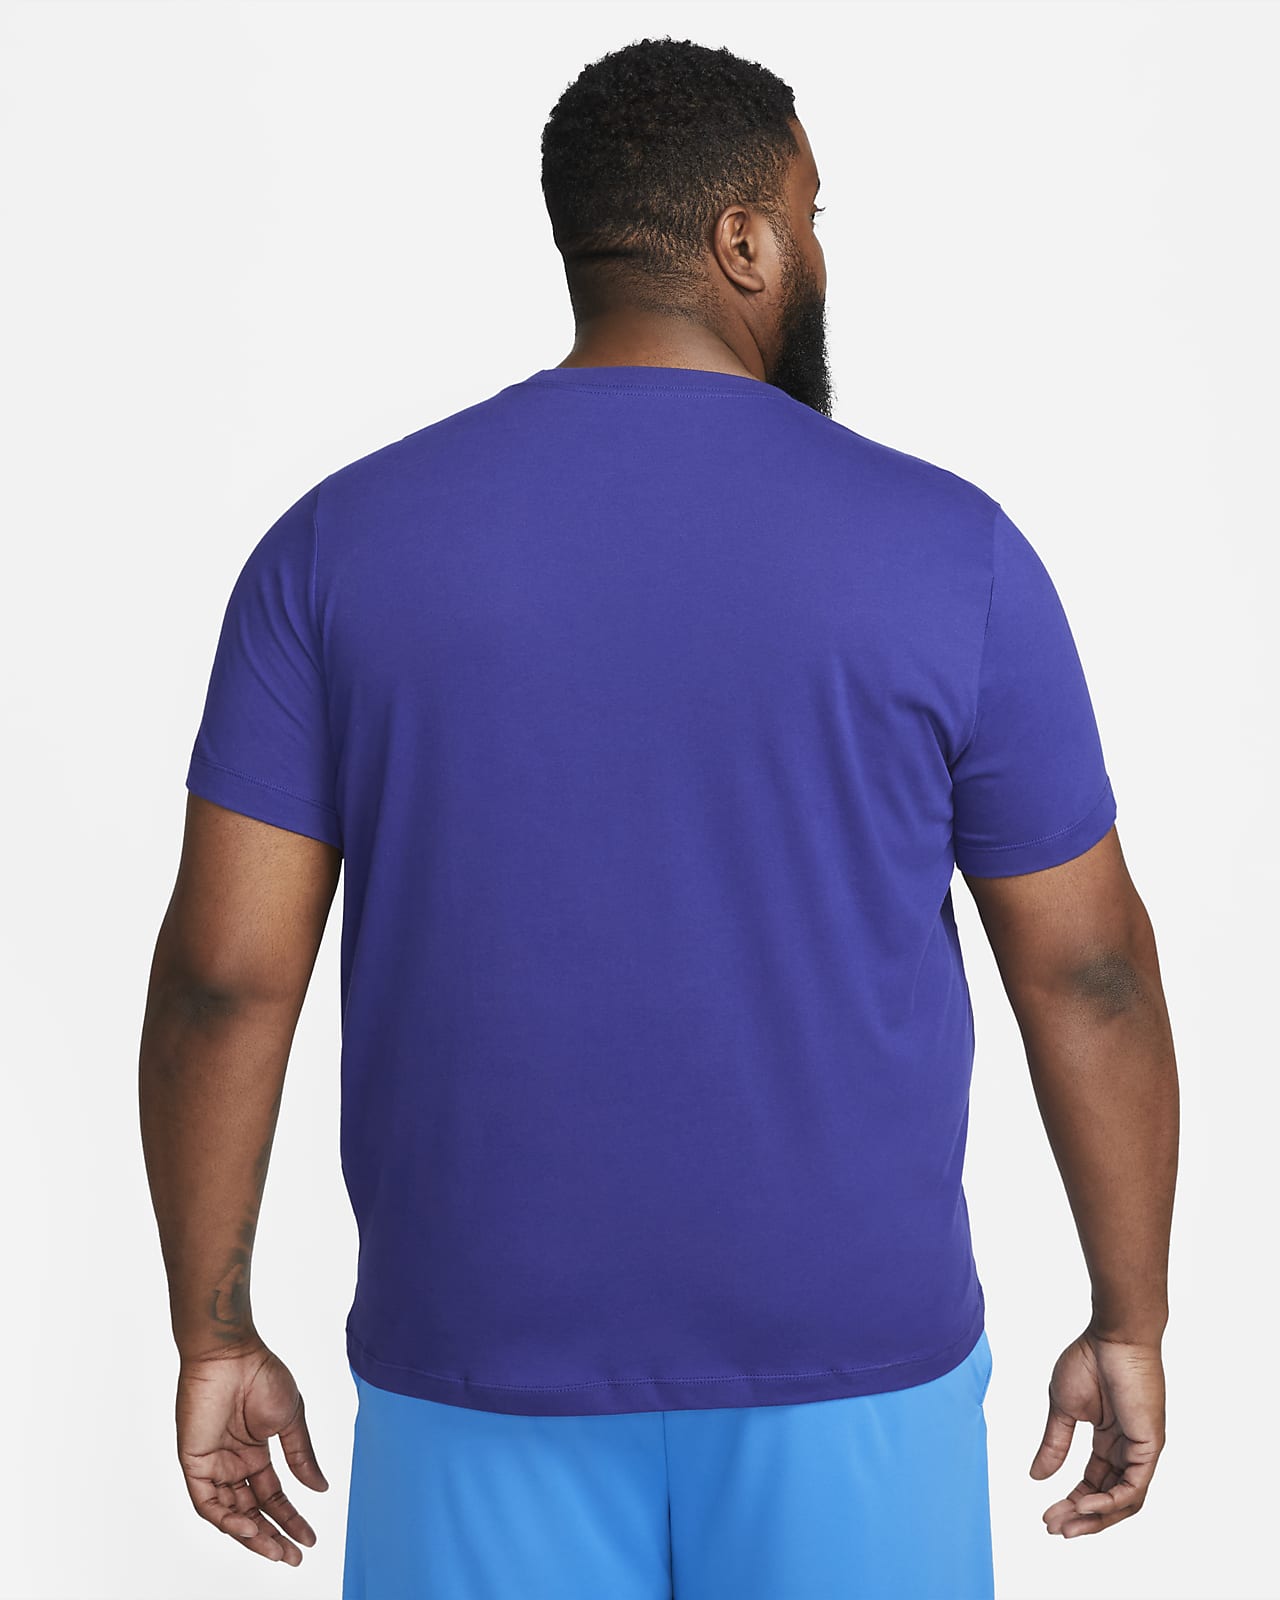 Nike Men's Swoosh T-Shirt.